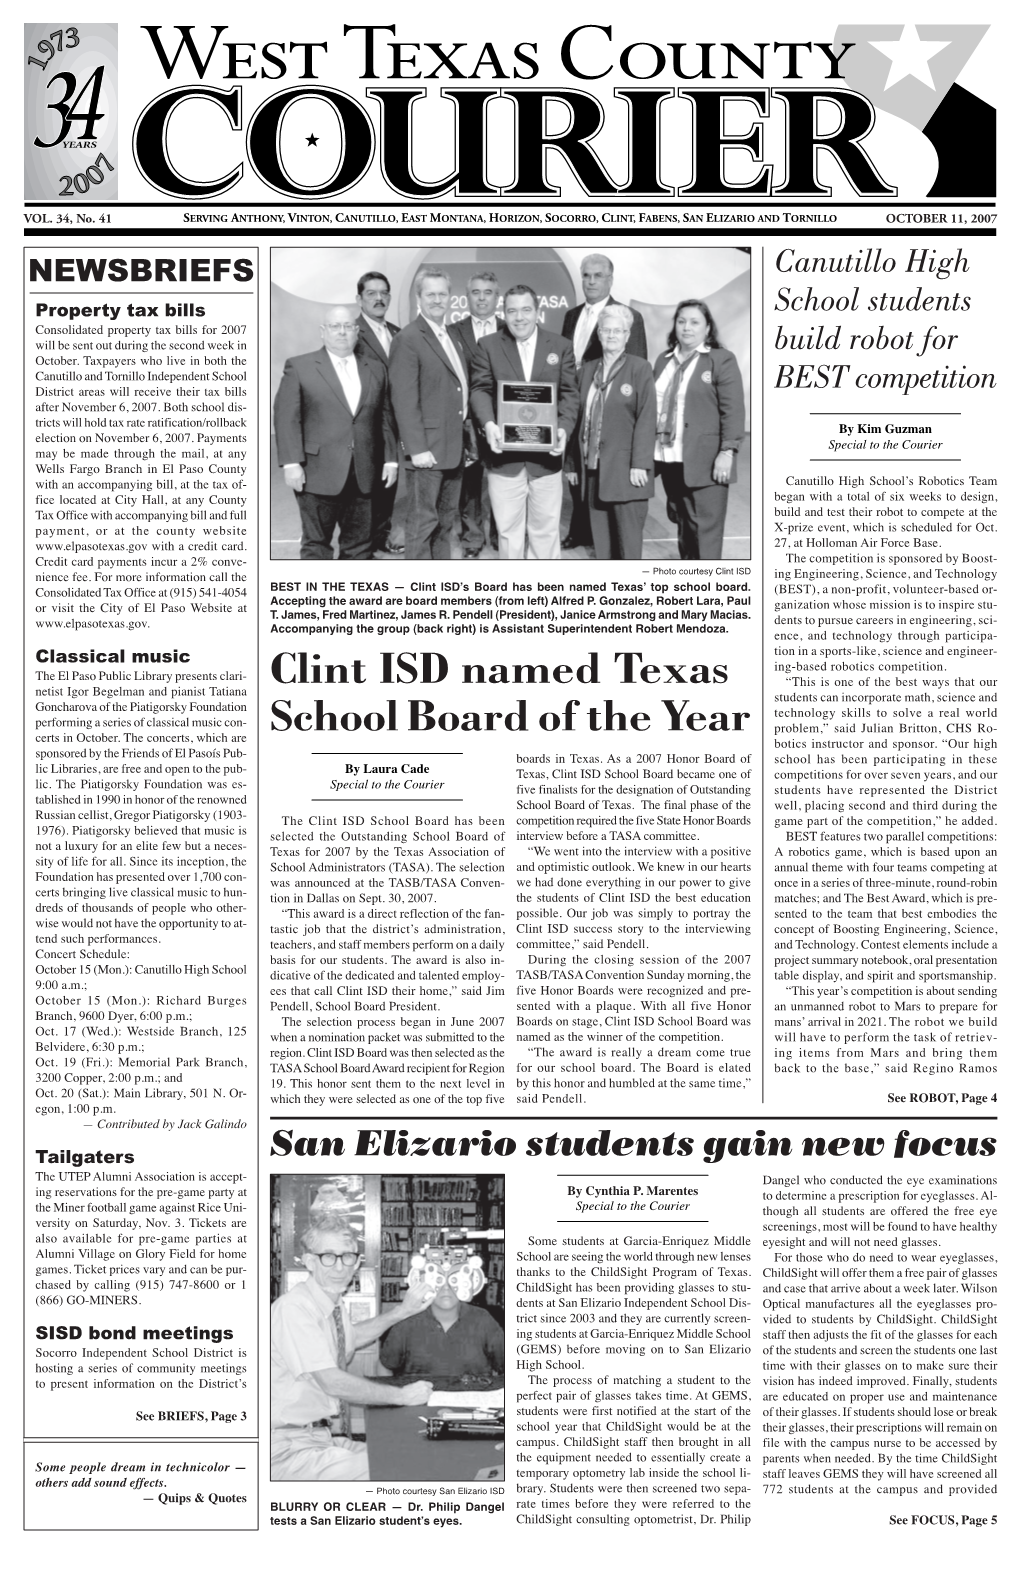 Clint ISD Named Texas School Board of the Year